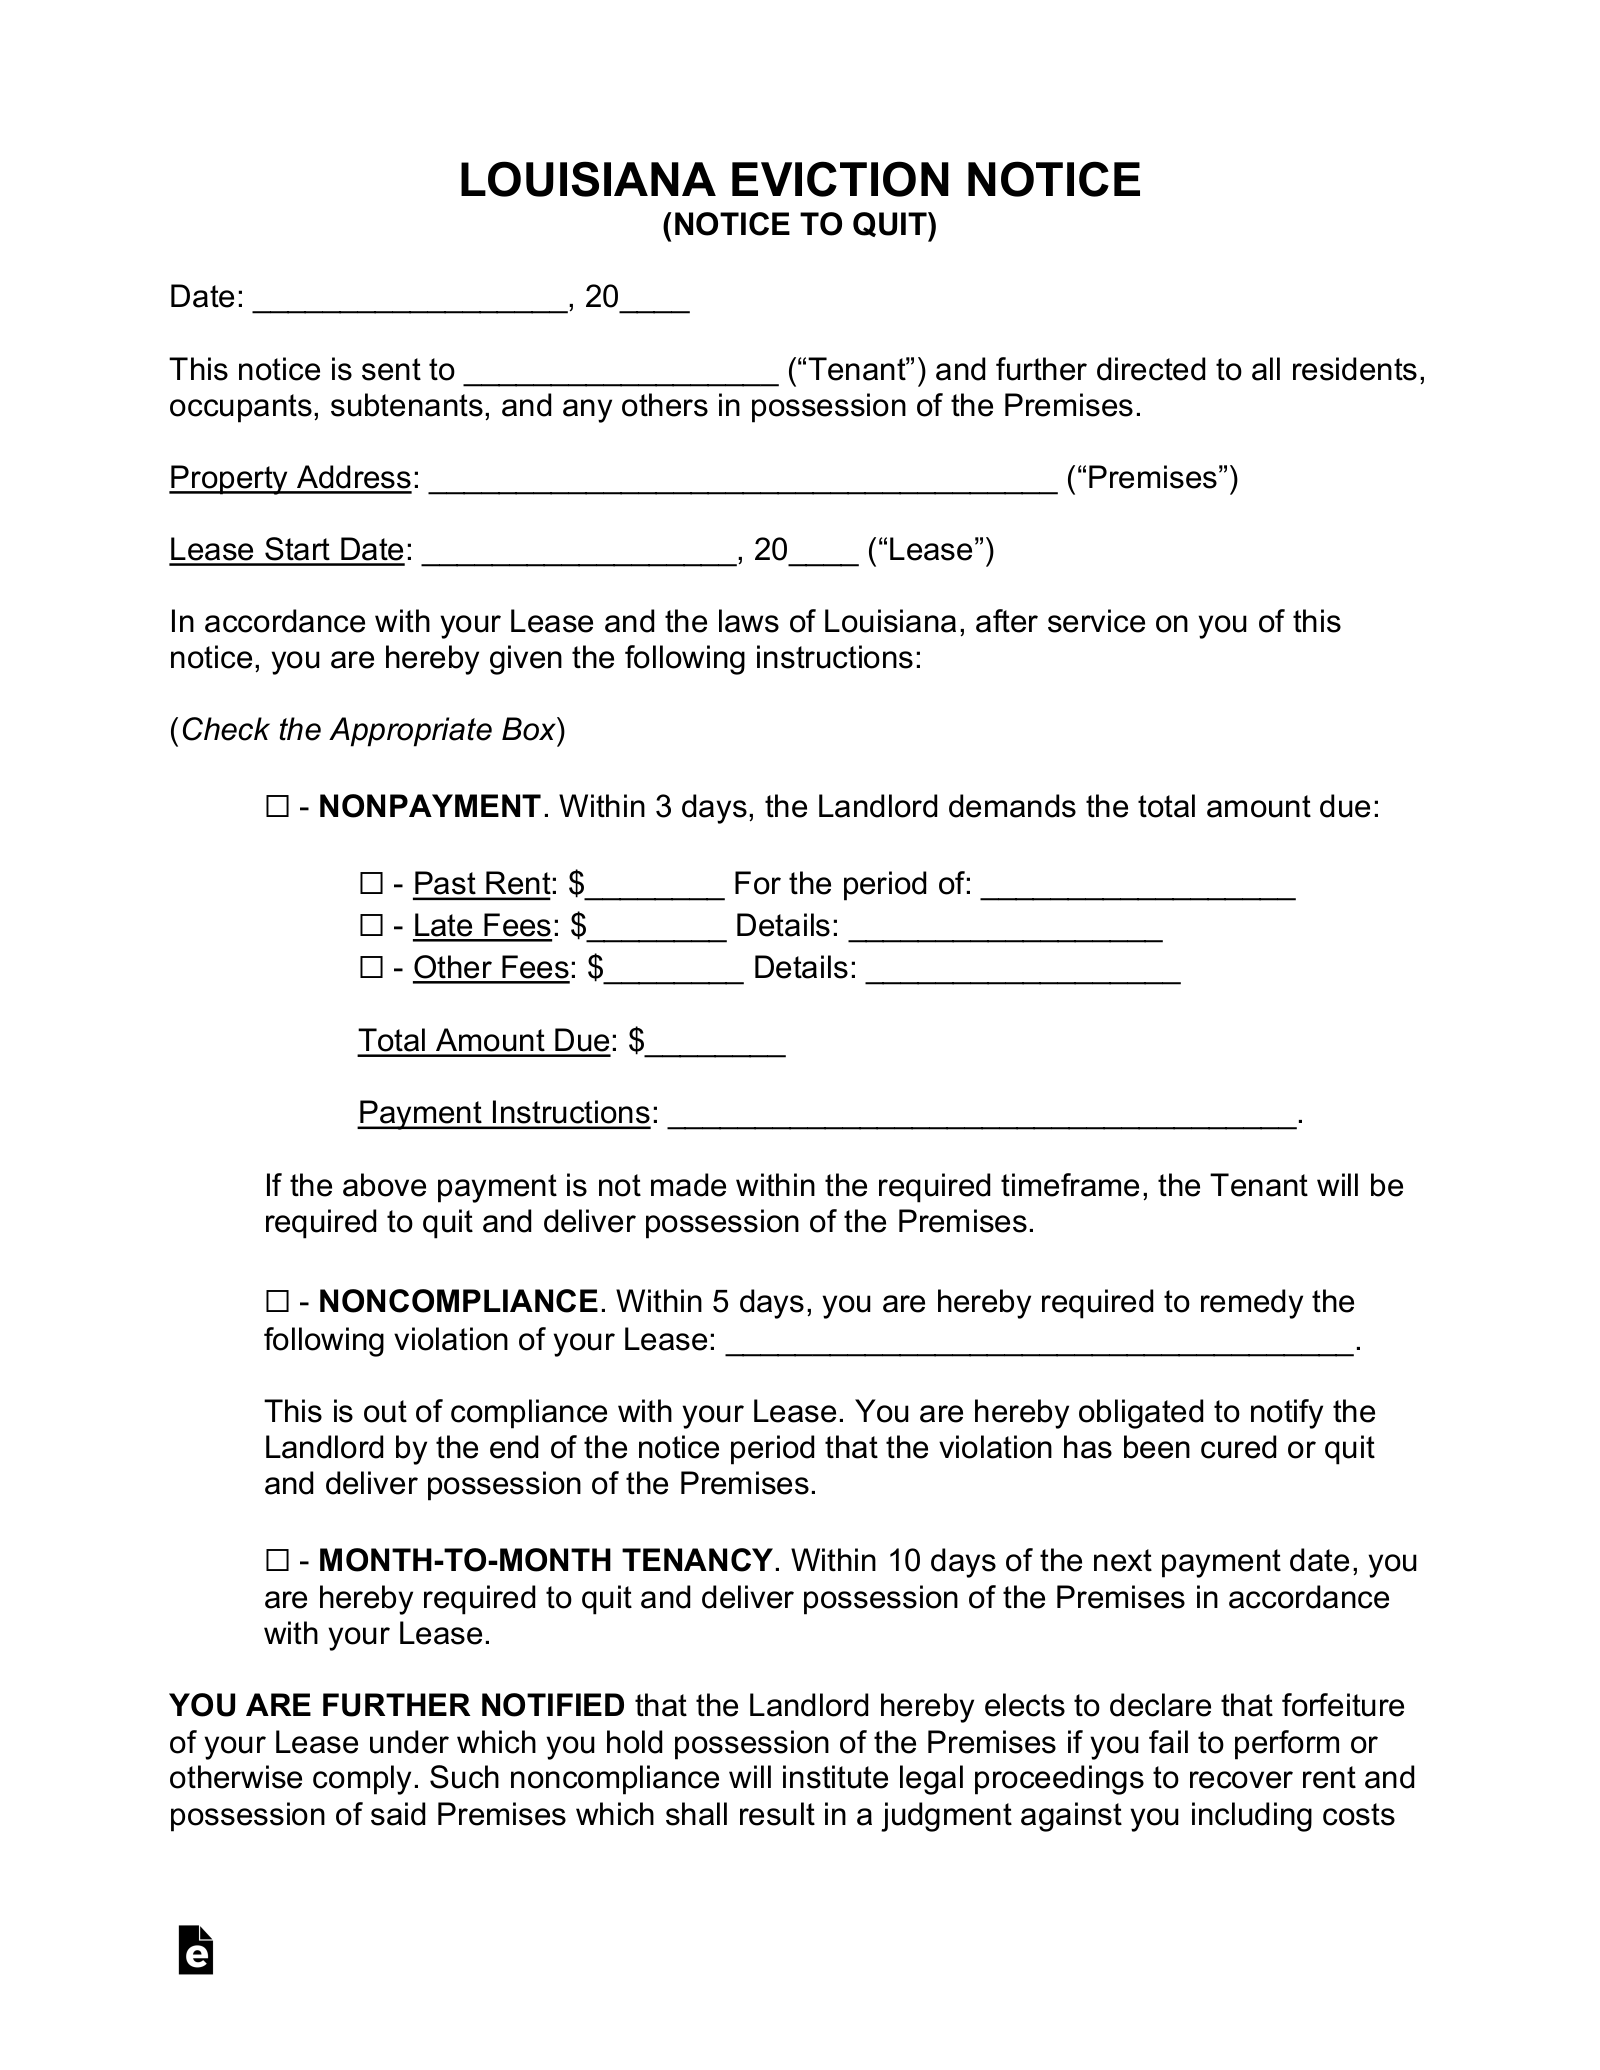 Louisiana Eviction Notice Forms (3)